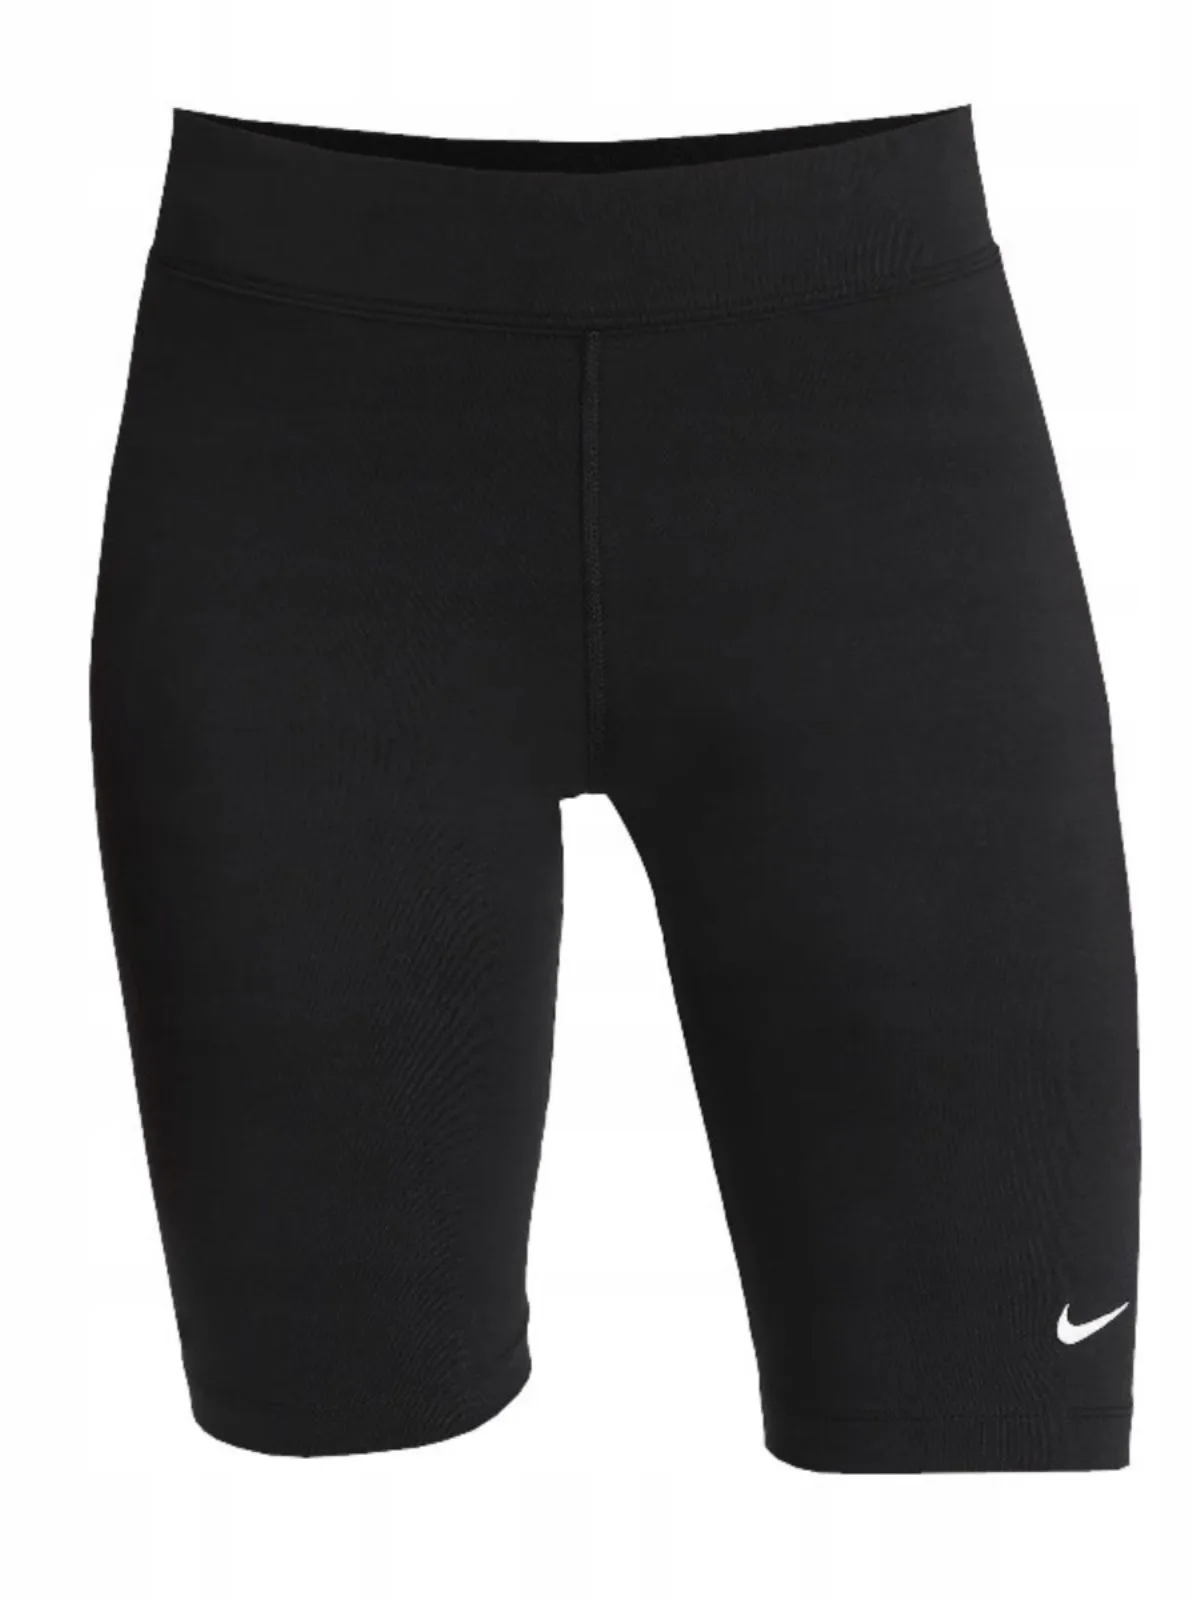 

Original Nike Fitness Cycling Pants Women's Running Tight Fifth Pants Sports Stretch Base Training Black Shorts CZ8527-010